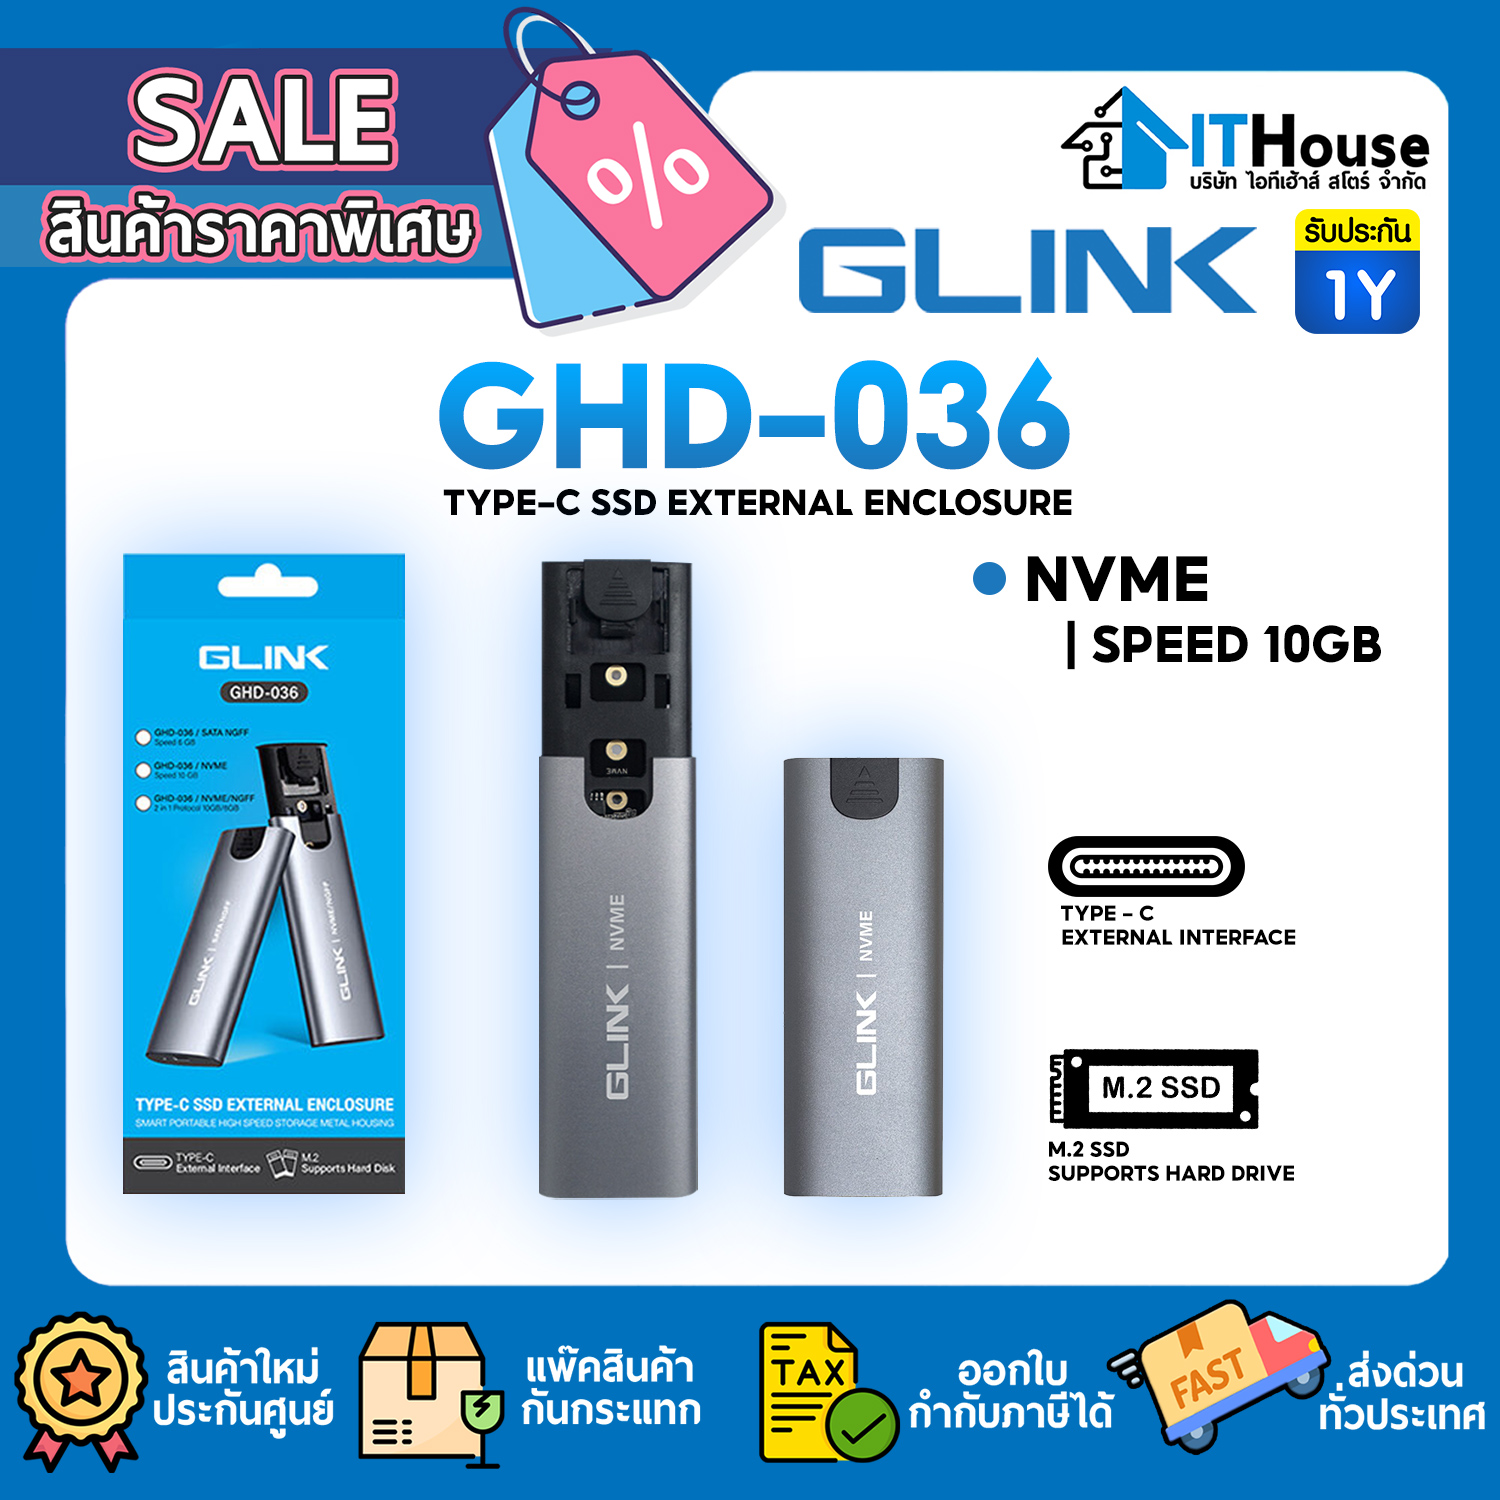 GLINK (GHD-036) TYPE-C SSD NVME EXTERNAL ENCLOSURE